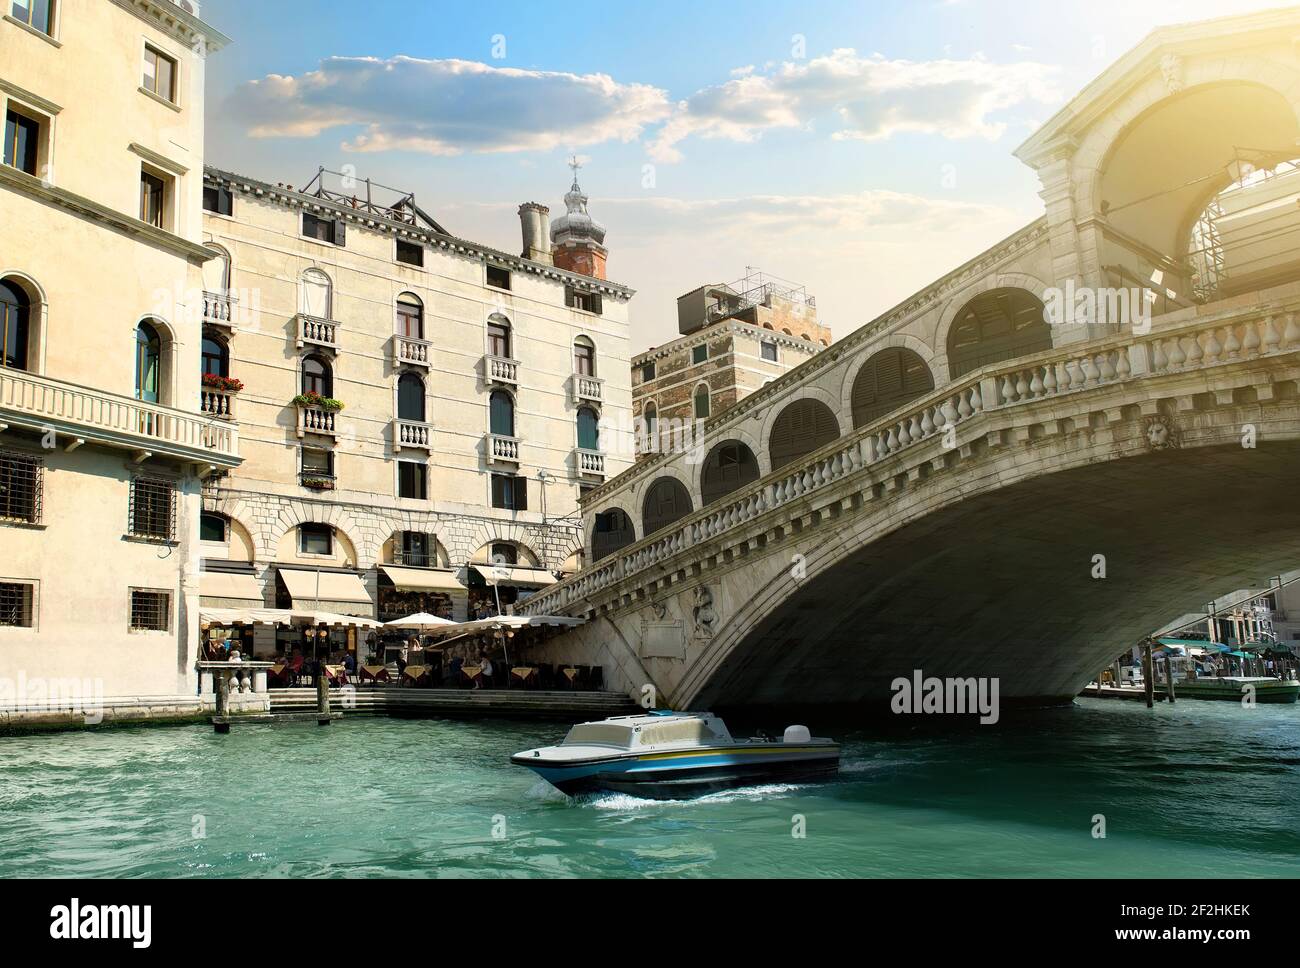 Rialto bridge and ship in Venice, Italy Stock Photo